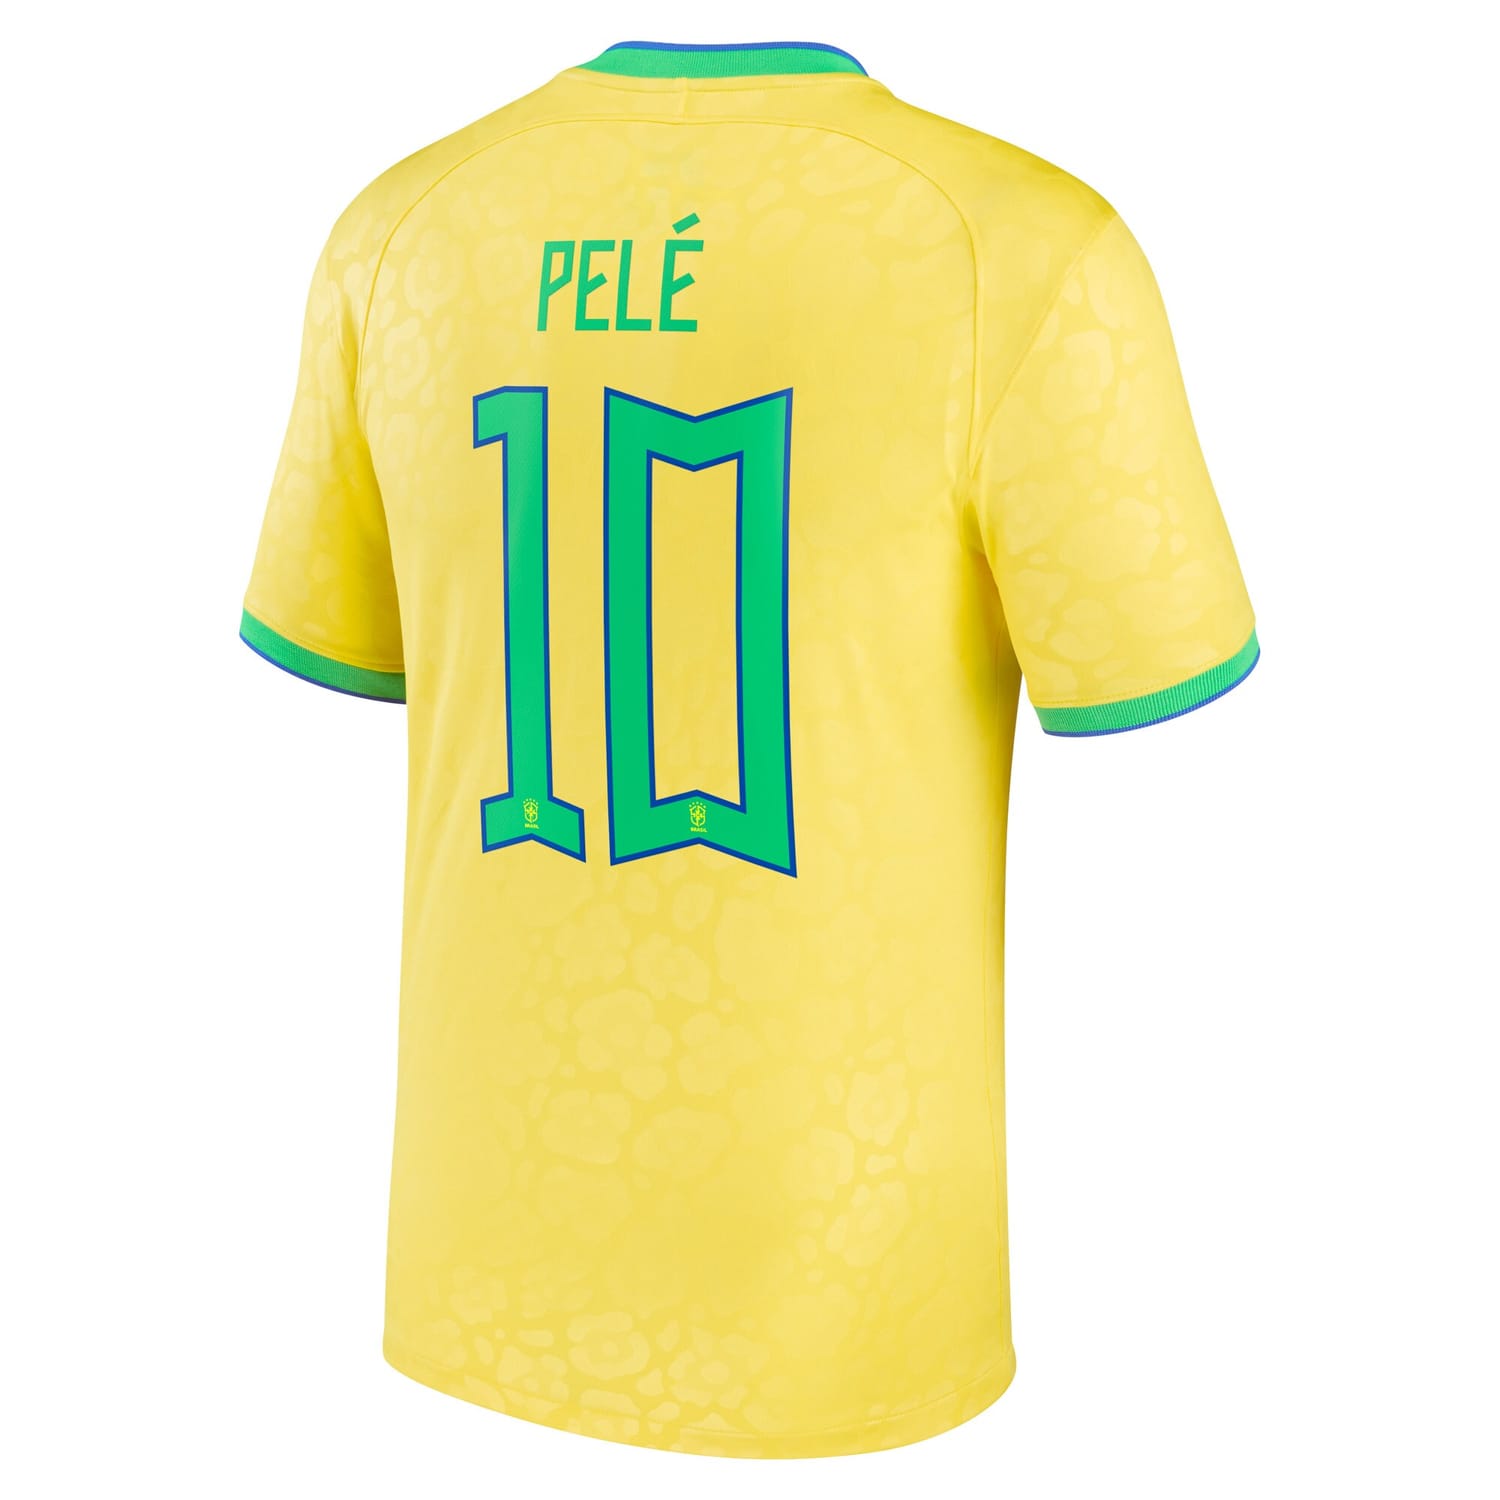 Brazil National Team Home Jersey Shirt Yellow 2022-23 player Pele printing for Men